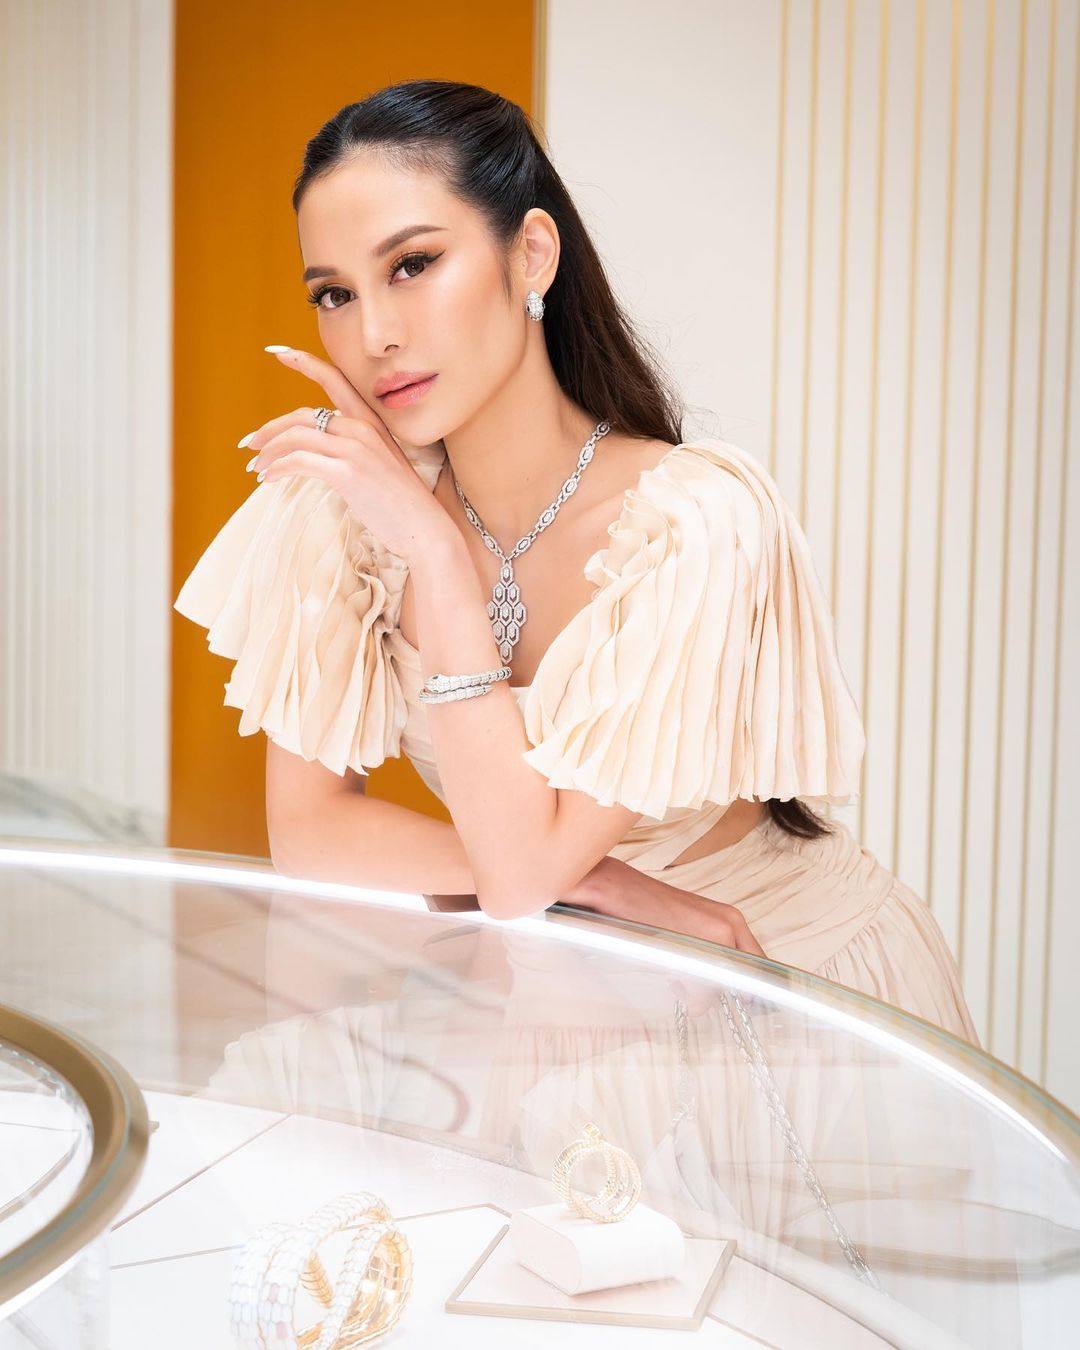 Hong Kong’s “It” girl Elly Lam looks elegant and refined wearing Bulgari jewellery. Photo: @elly/Instagram